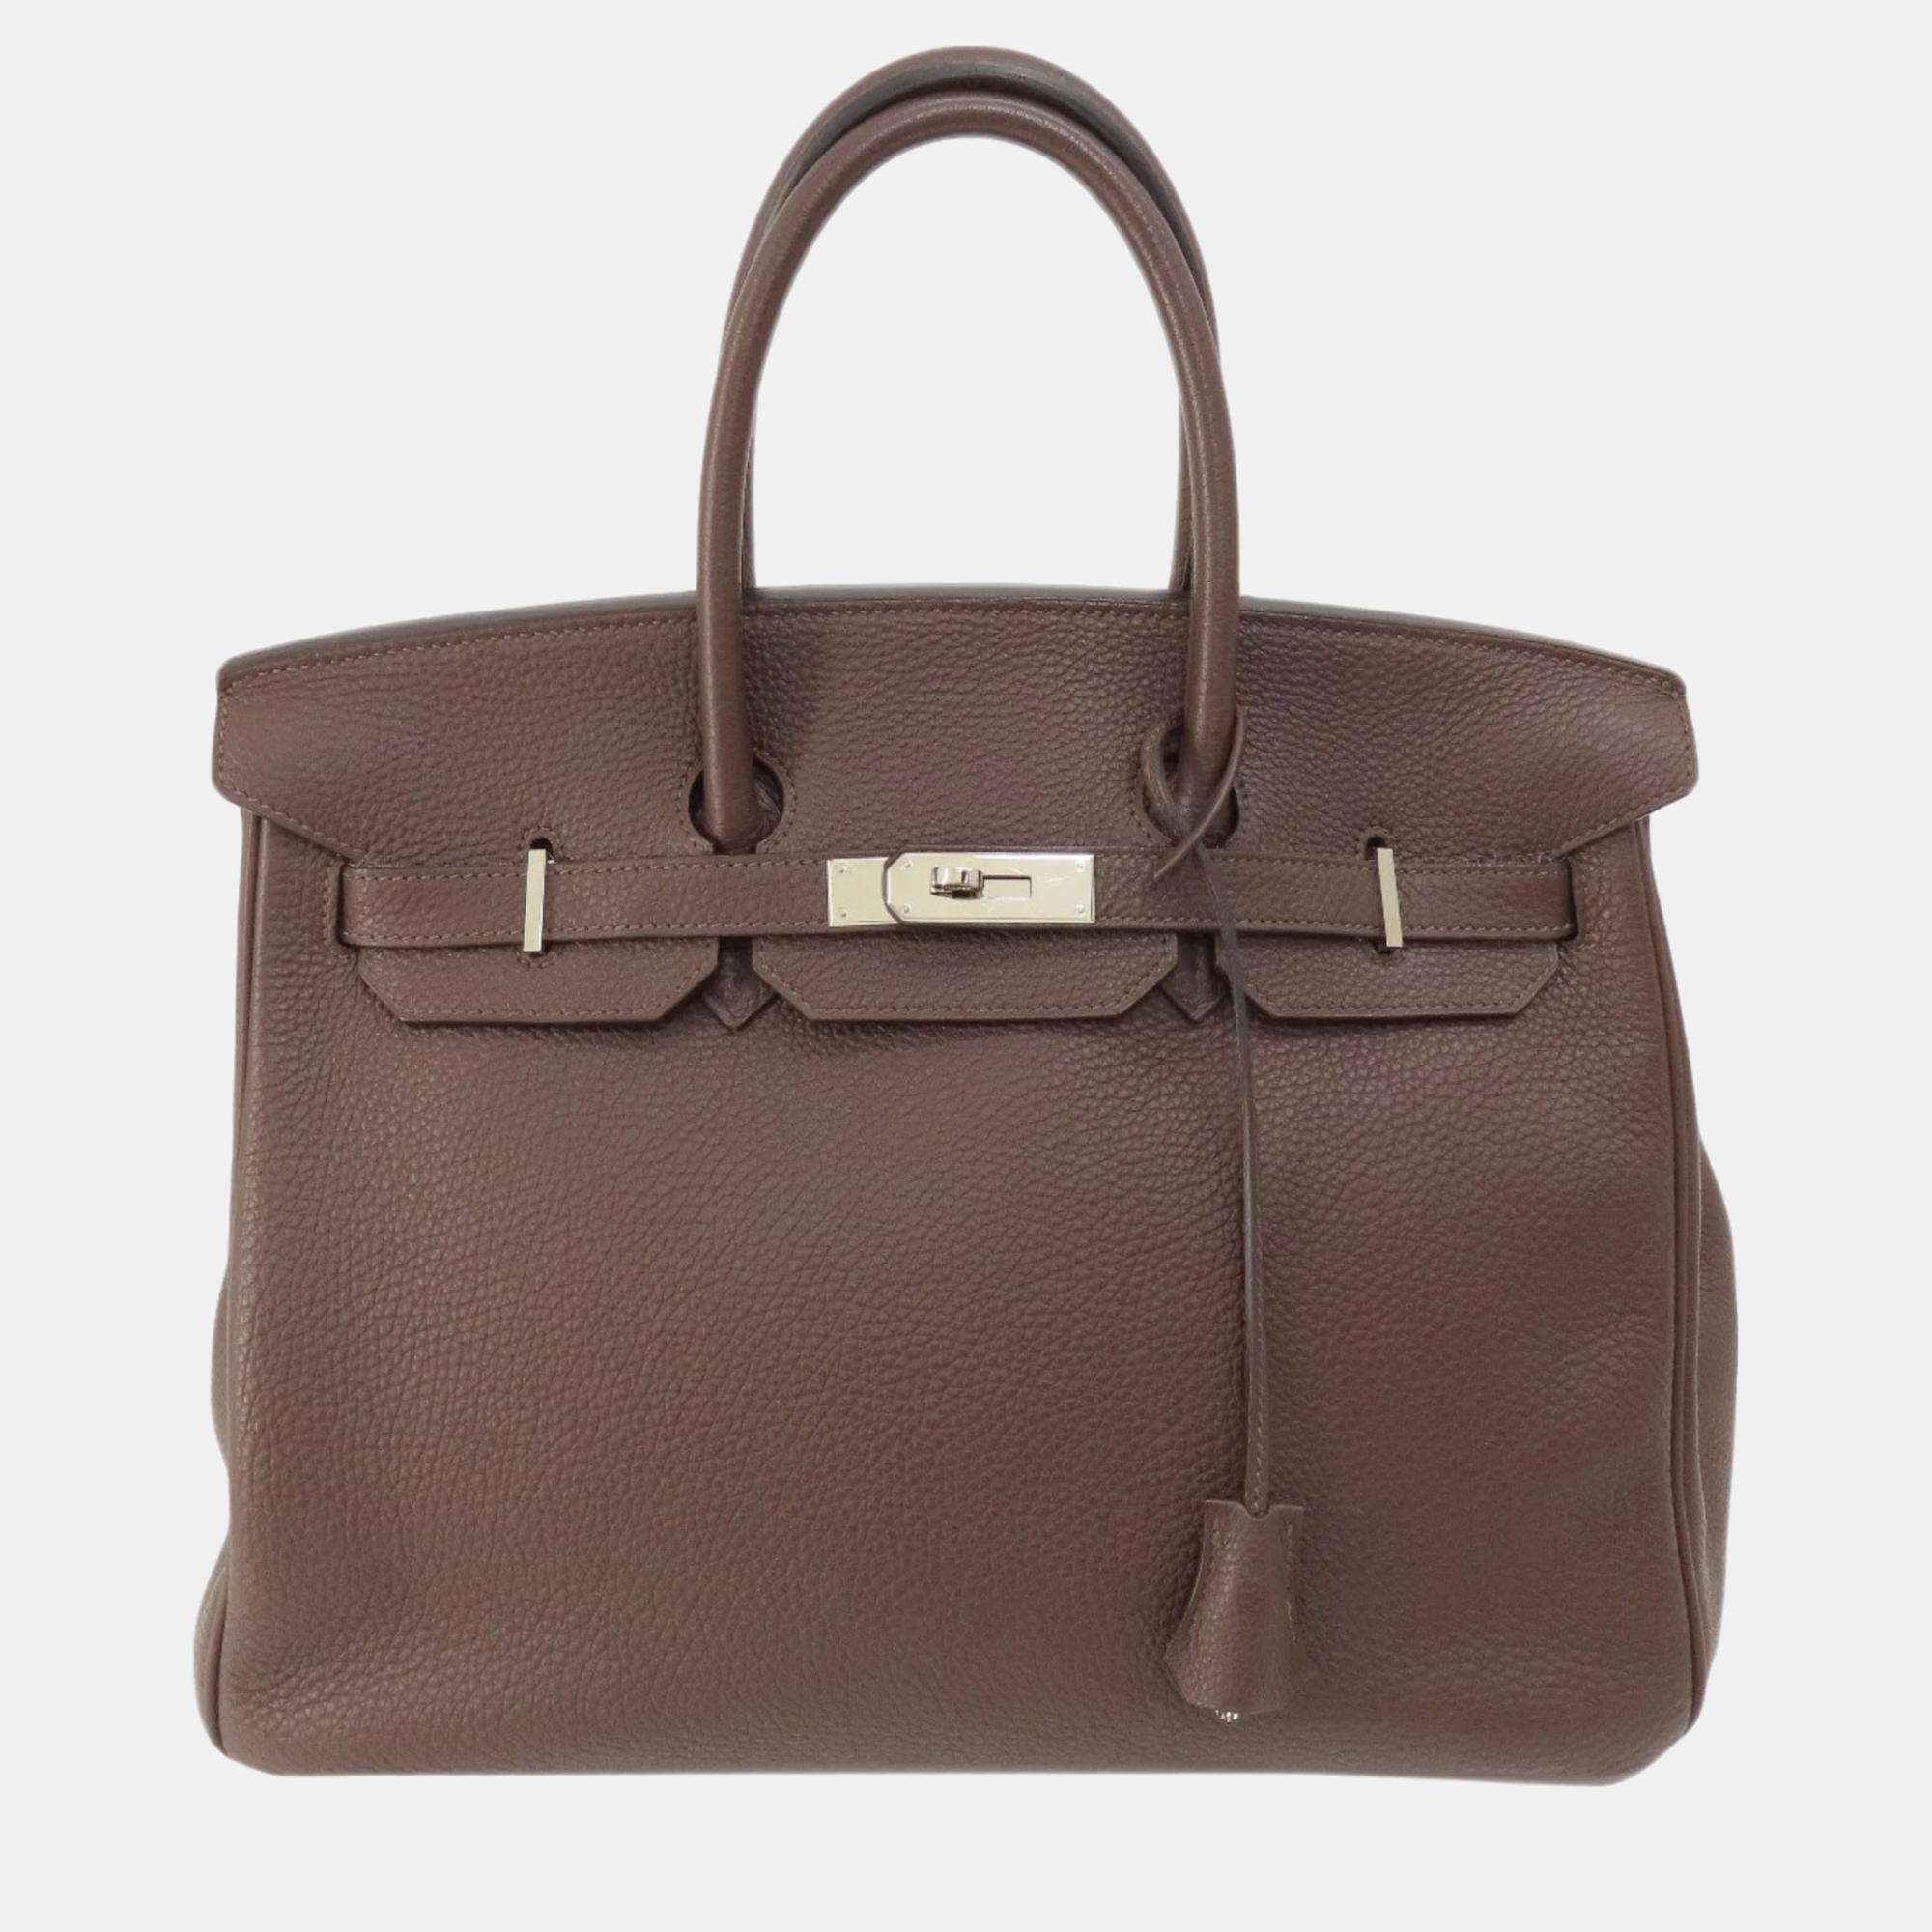 Hermes dark brown togo birkin 35 handbag